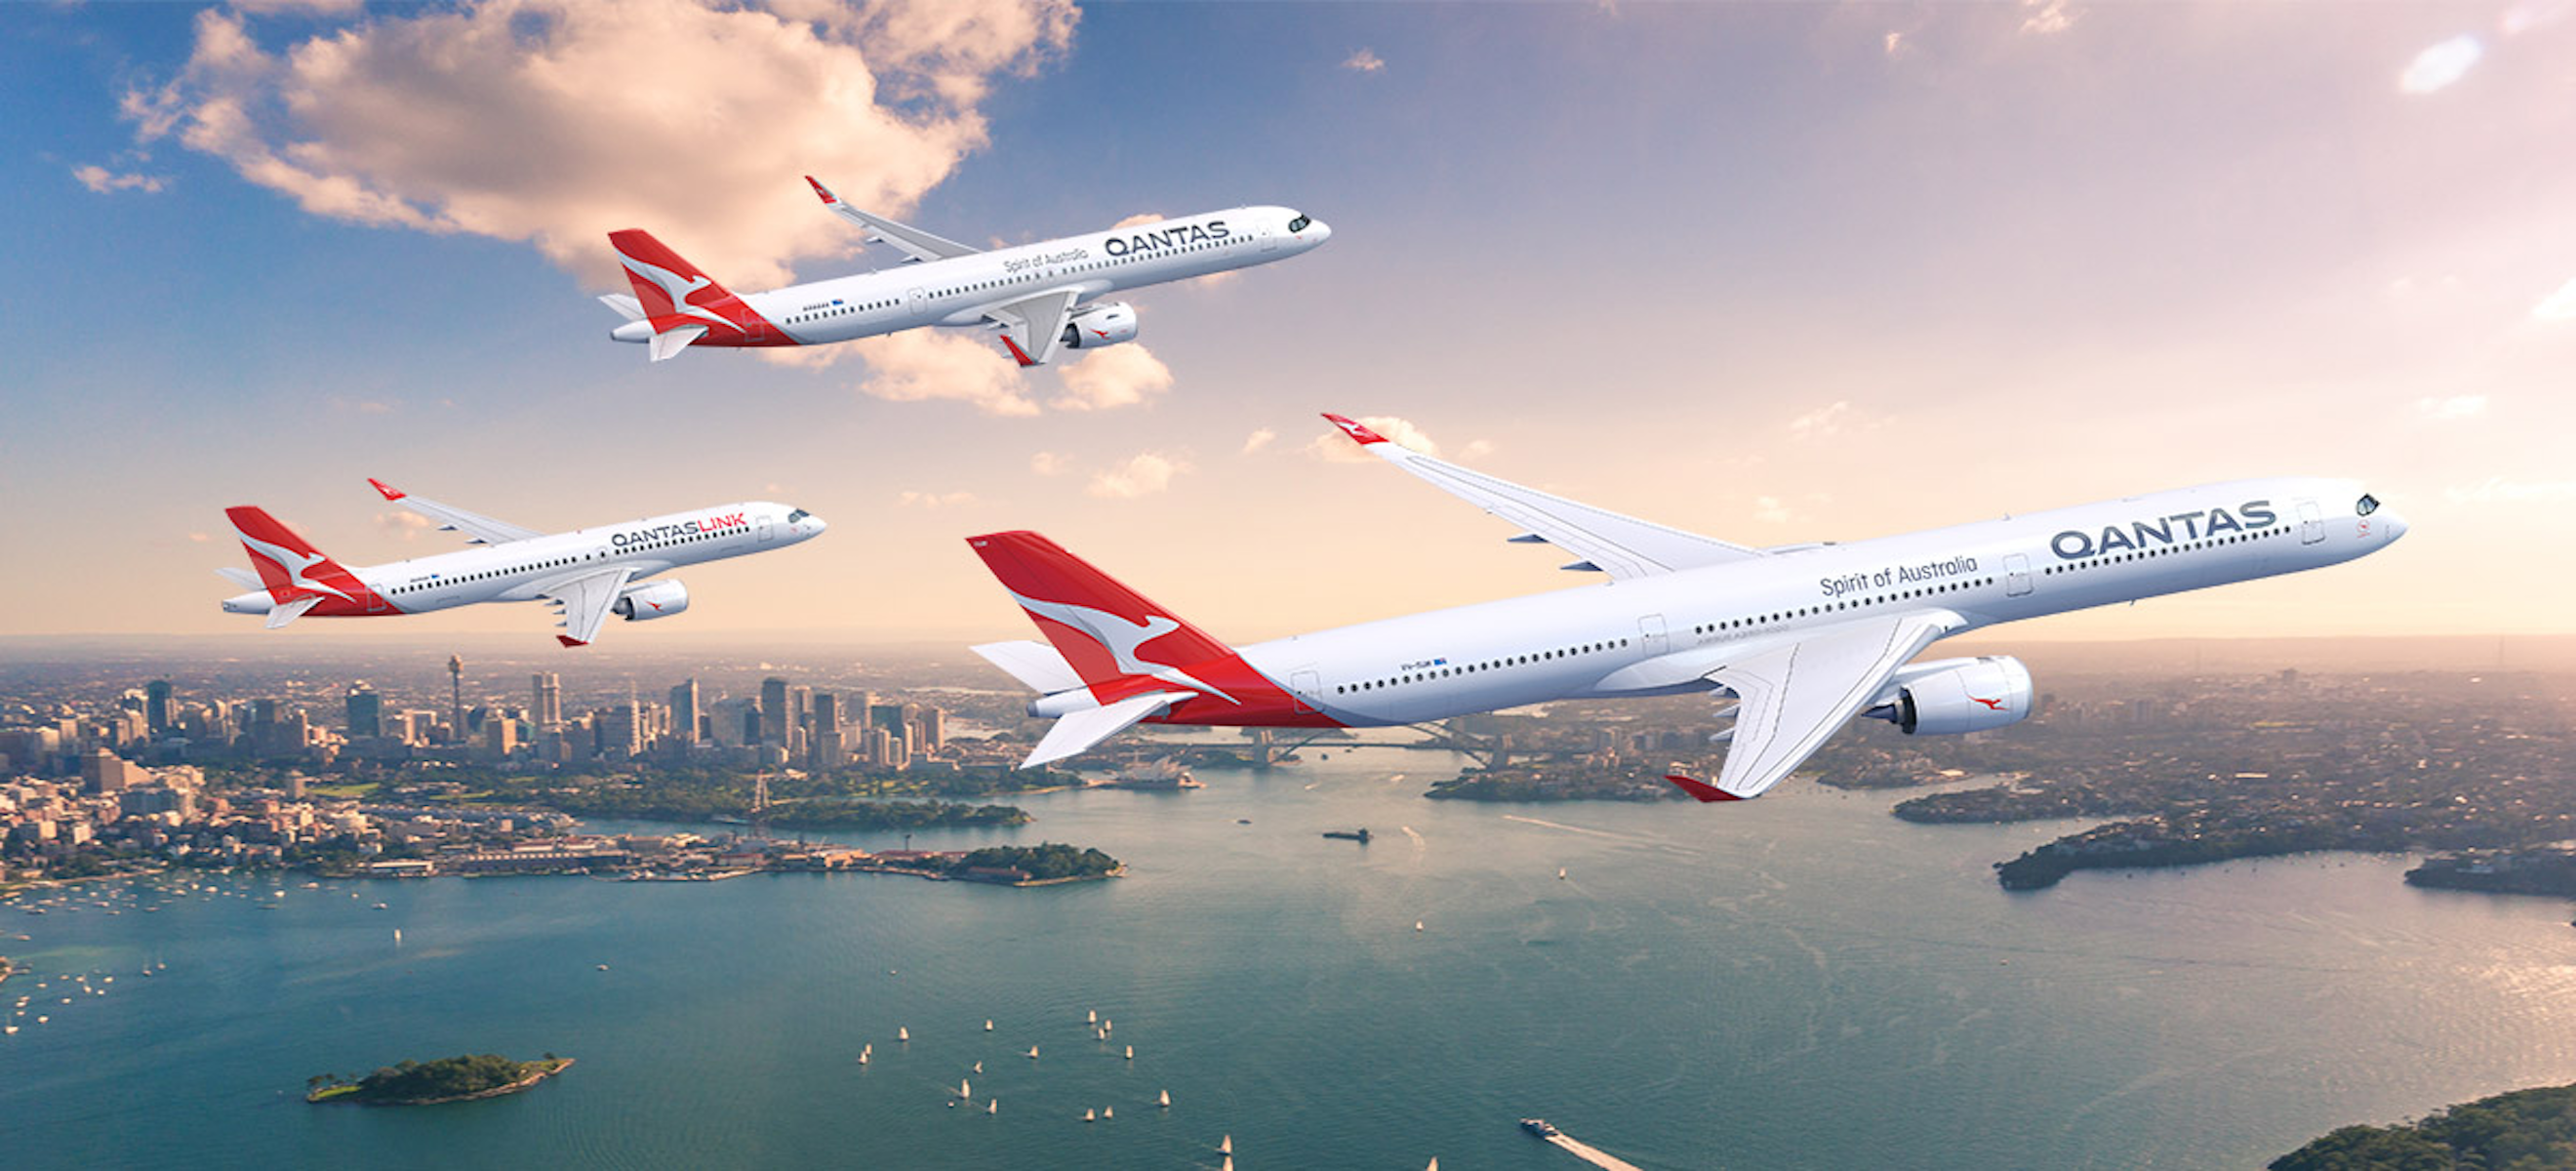 Qantas Details Ultra Long Haul Flights To New York And London Falstaff 4851